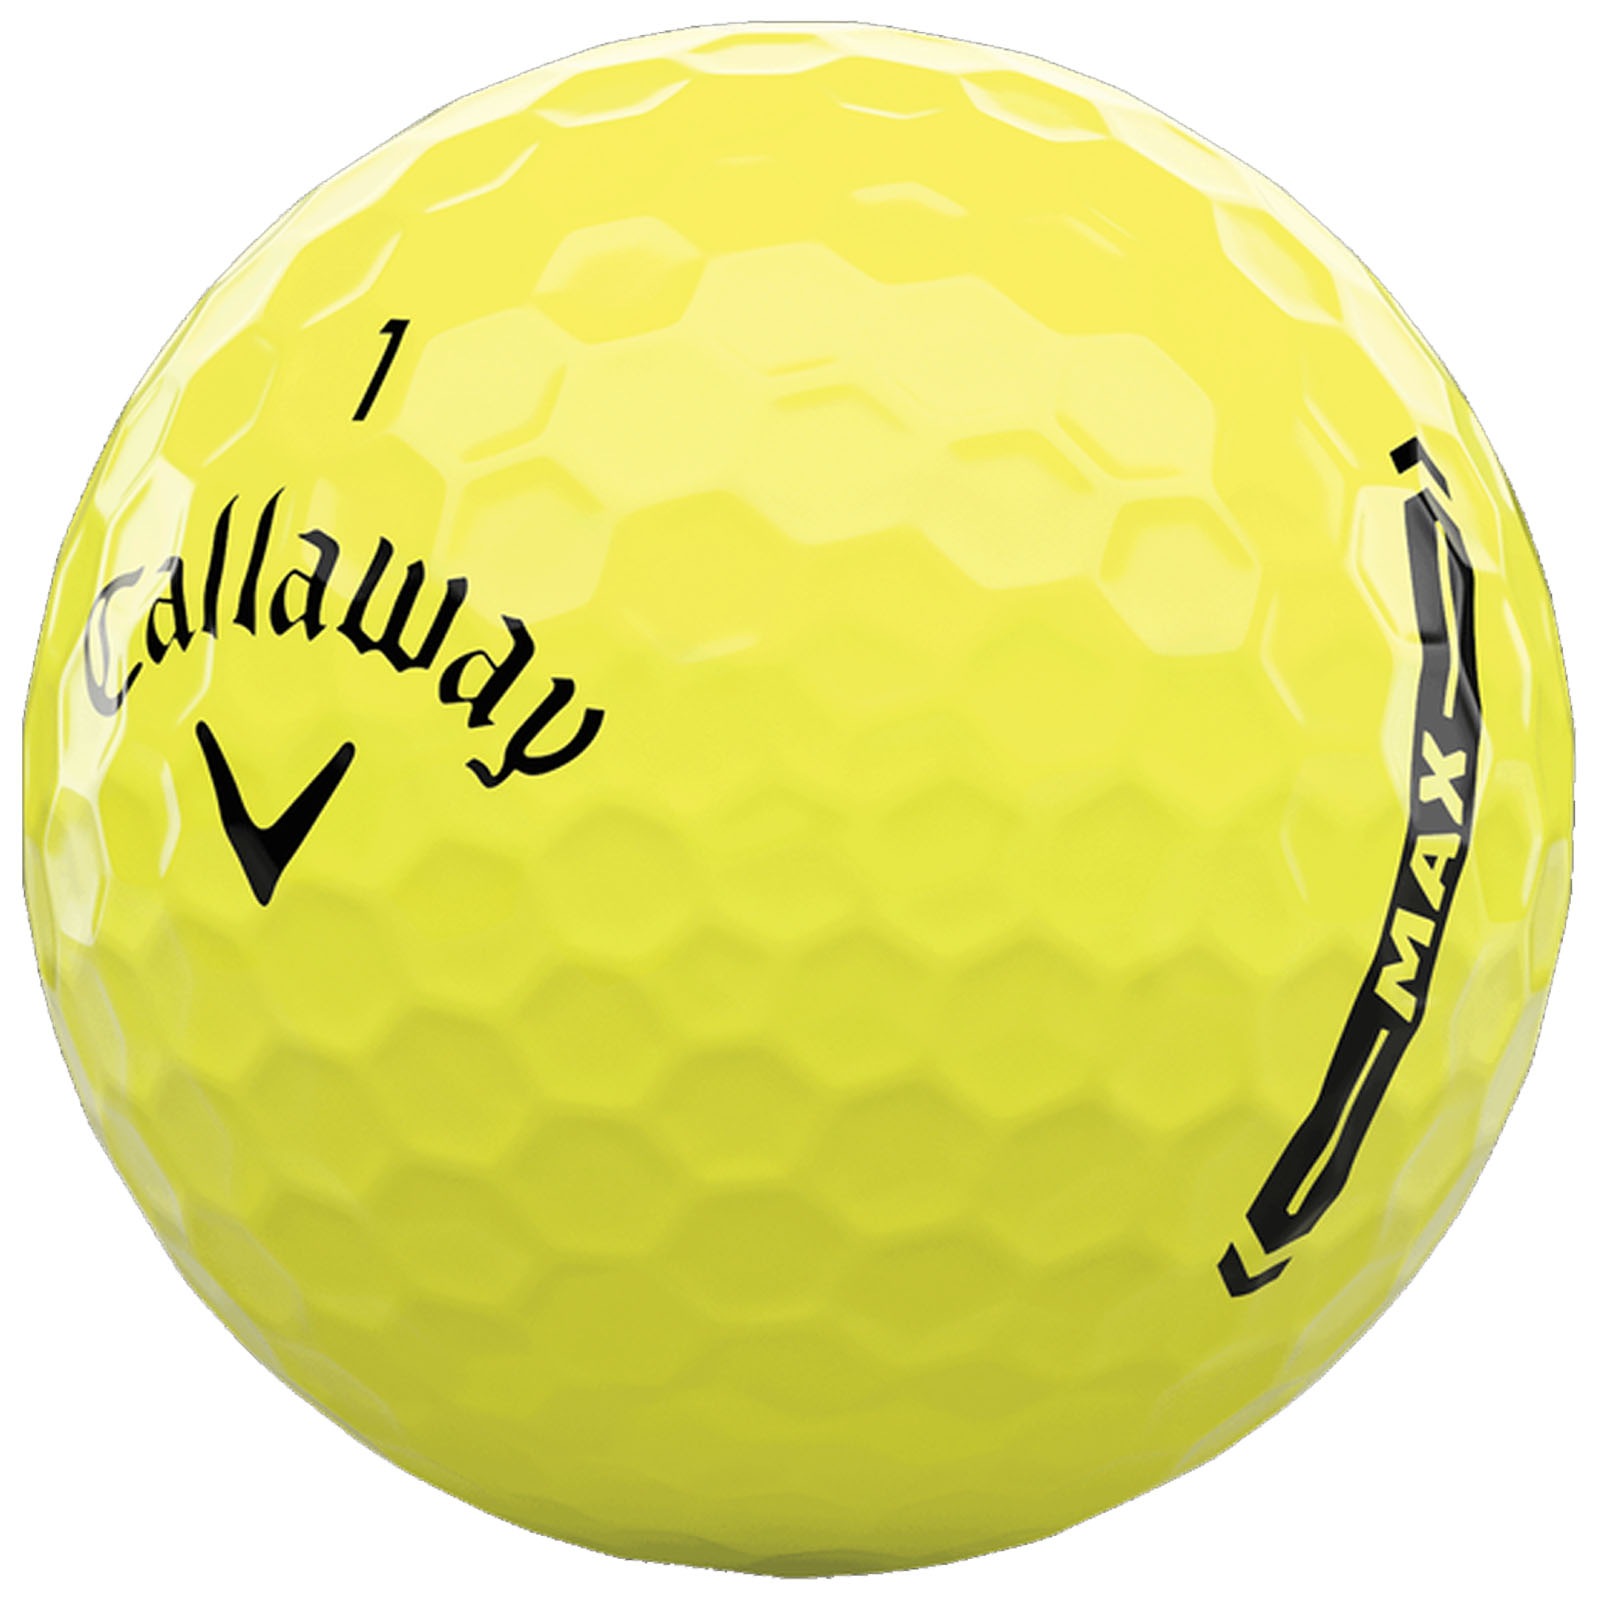 Шар для гольфа. Шарики для гольфа Callaway. Мяч для гольфа Callaway CXR Power. Callaway Orange Golf balls. Max ball